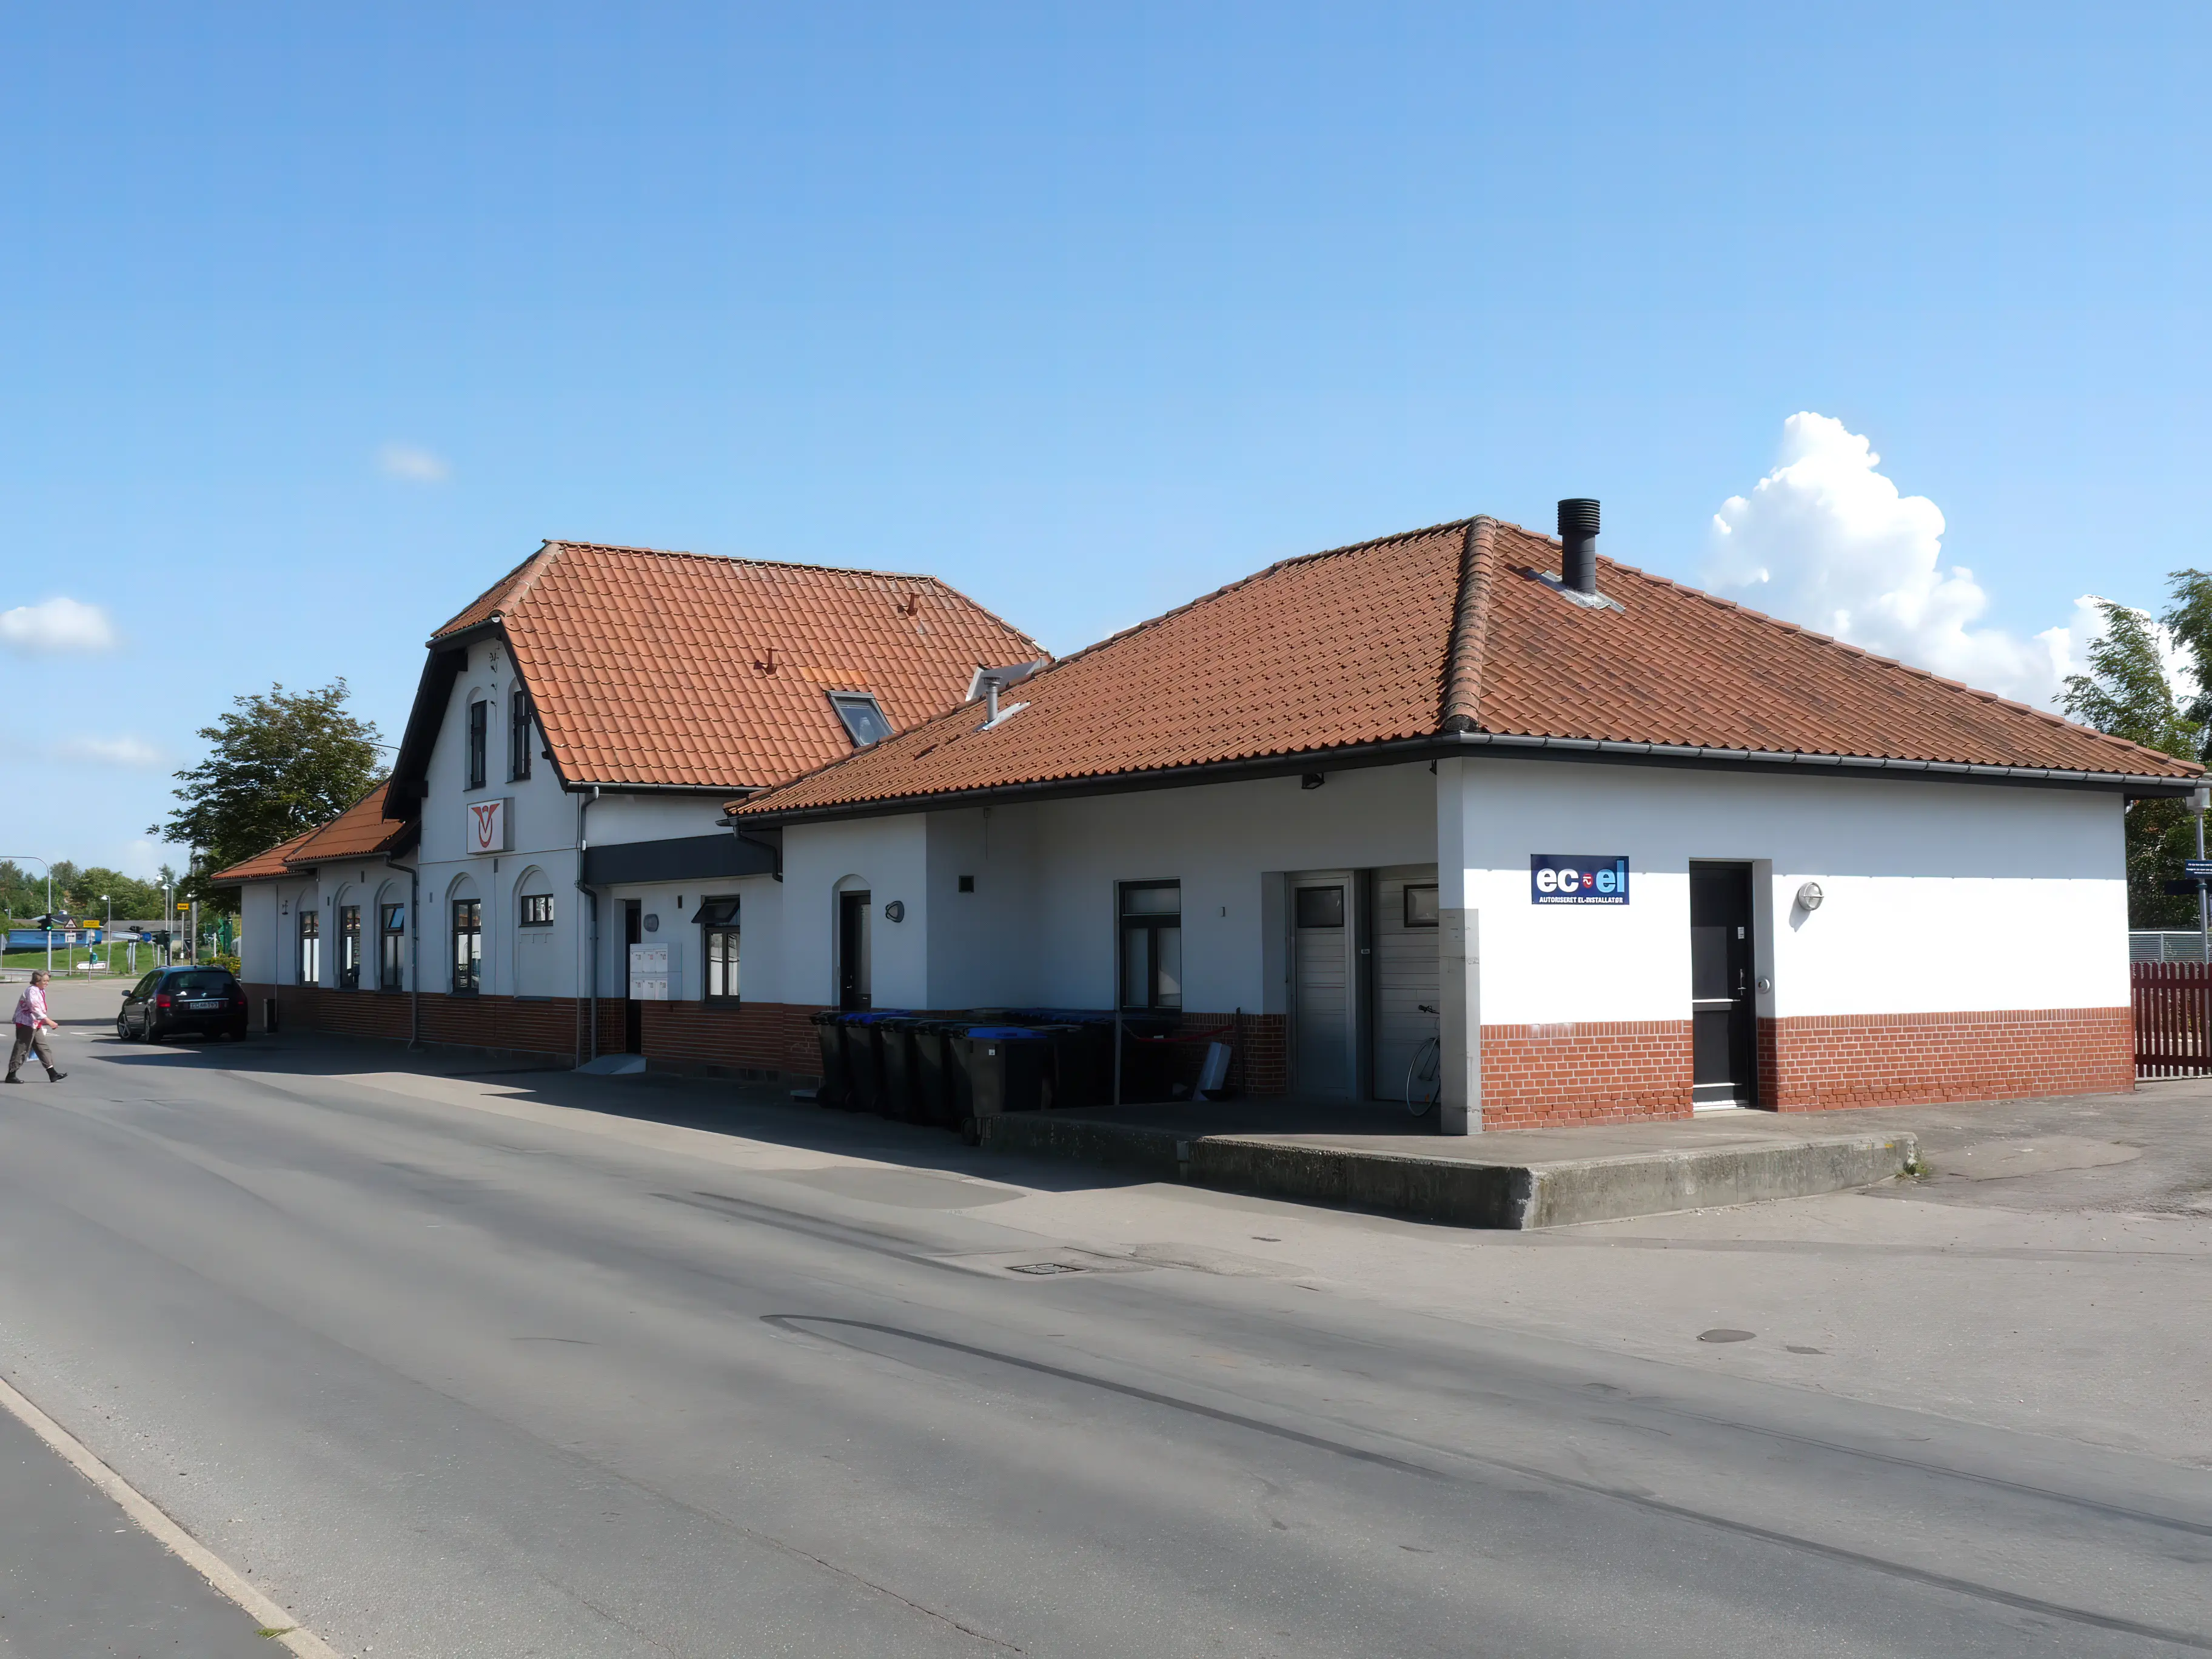 Asnæs Station.